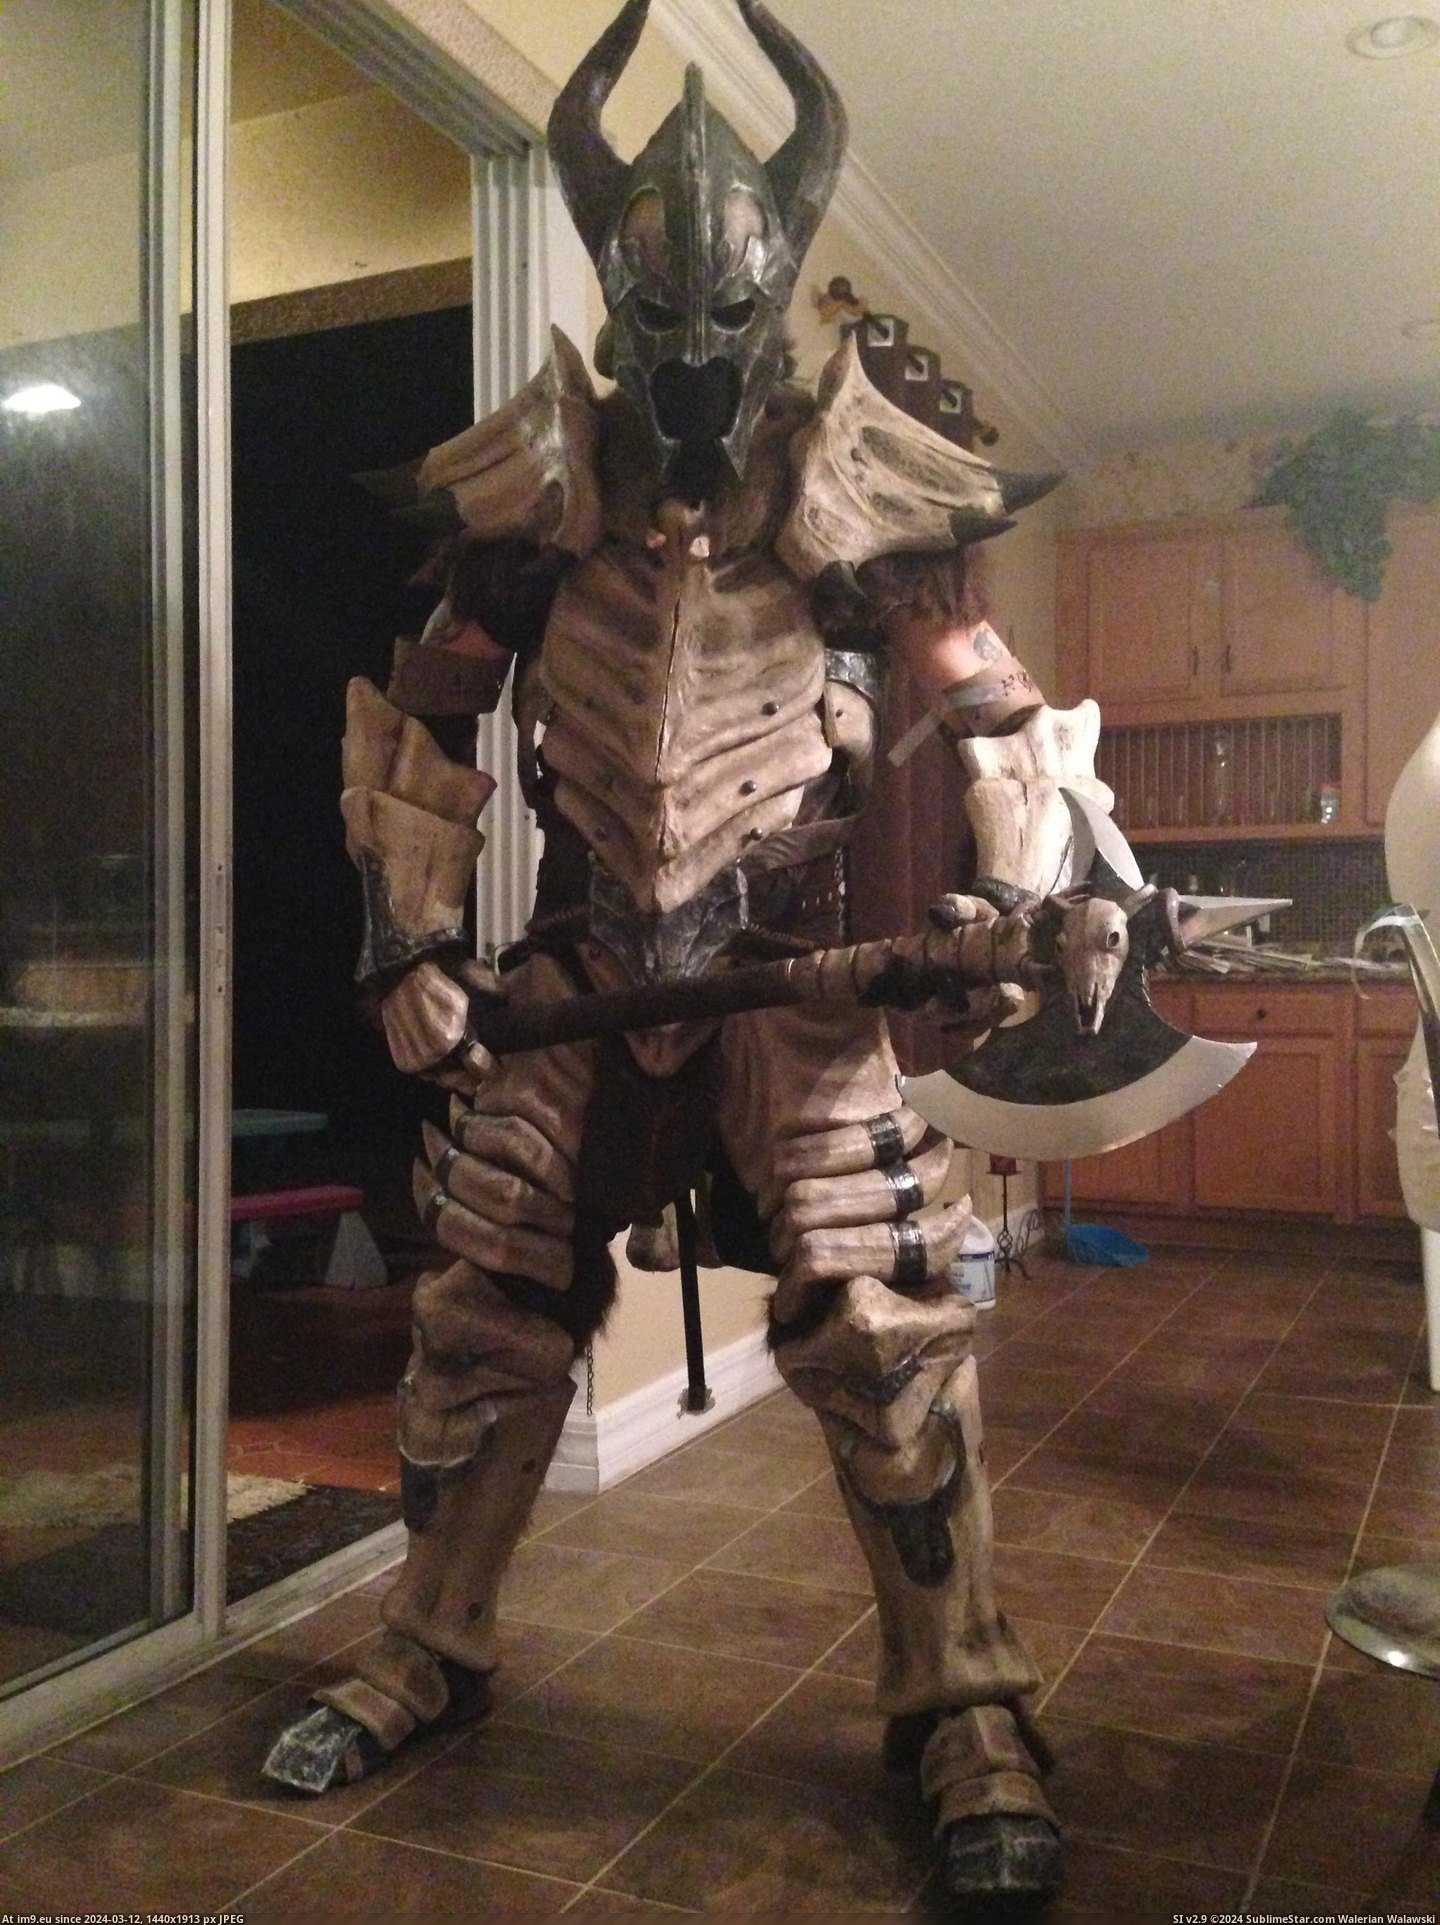 #Gaming #How #Dragonbone #Skyrim #Armor [Gaming] [Self] Skyrim Dragonbone Armor - How I made it 27 Pic. (Изображение из альбом My r/GAMING favs))